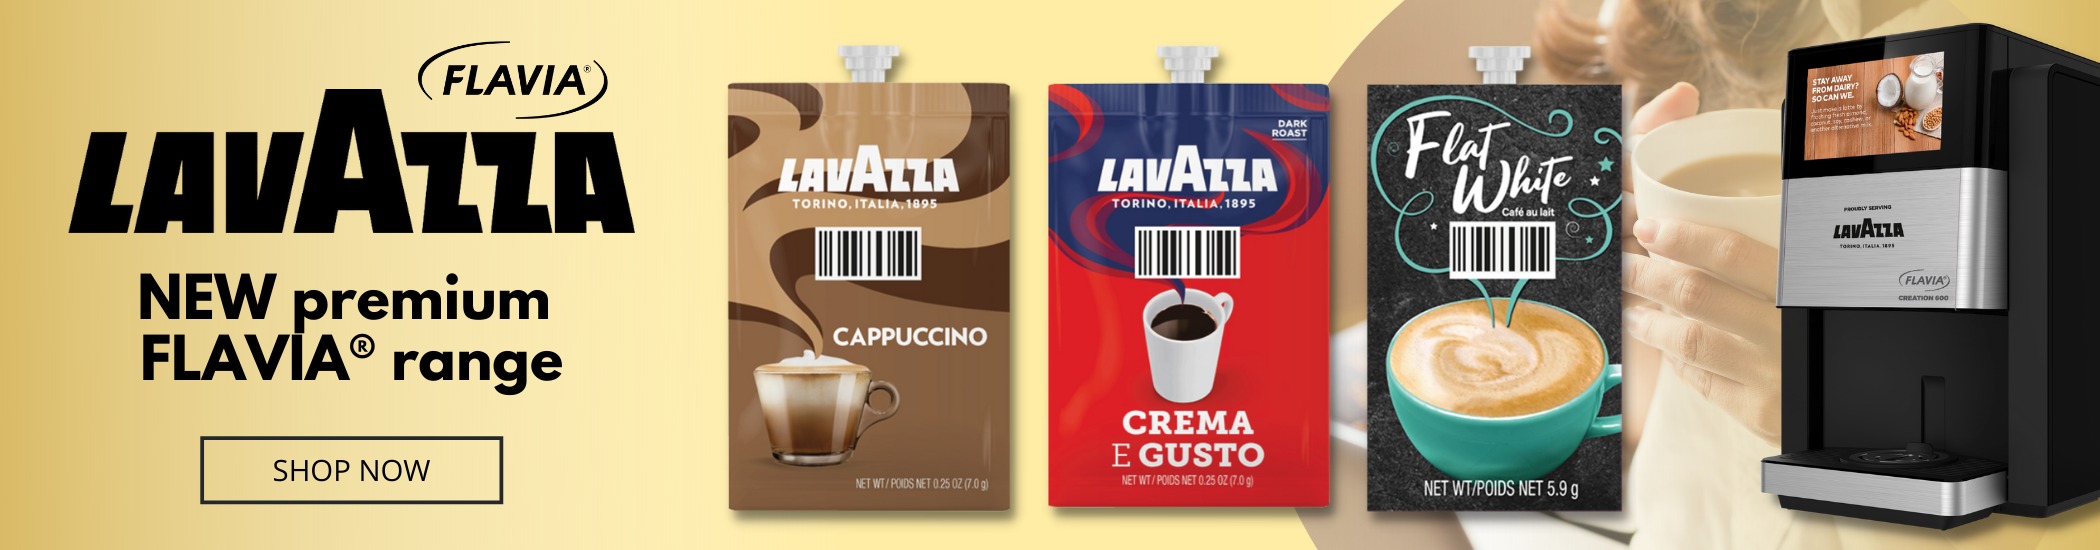 Lavazza flavia coffee range machines